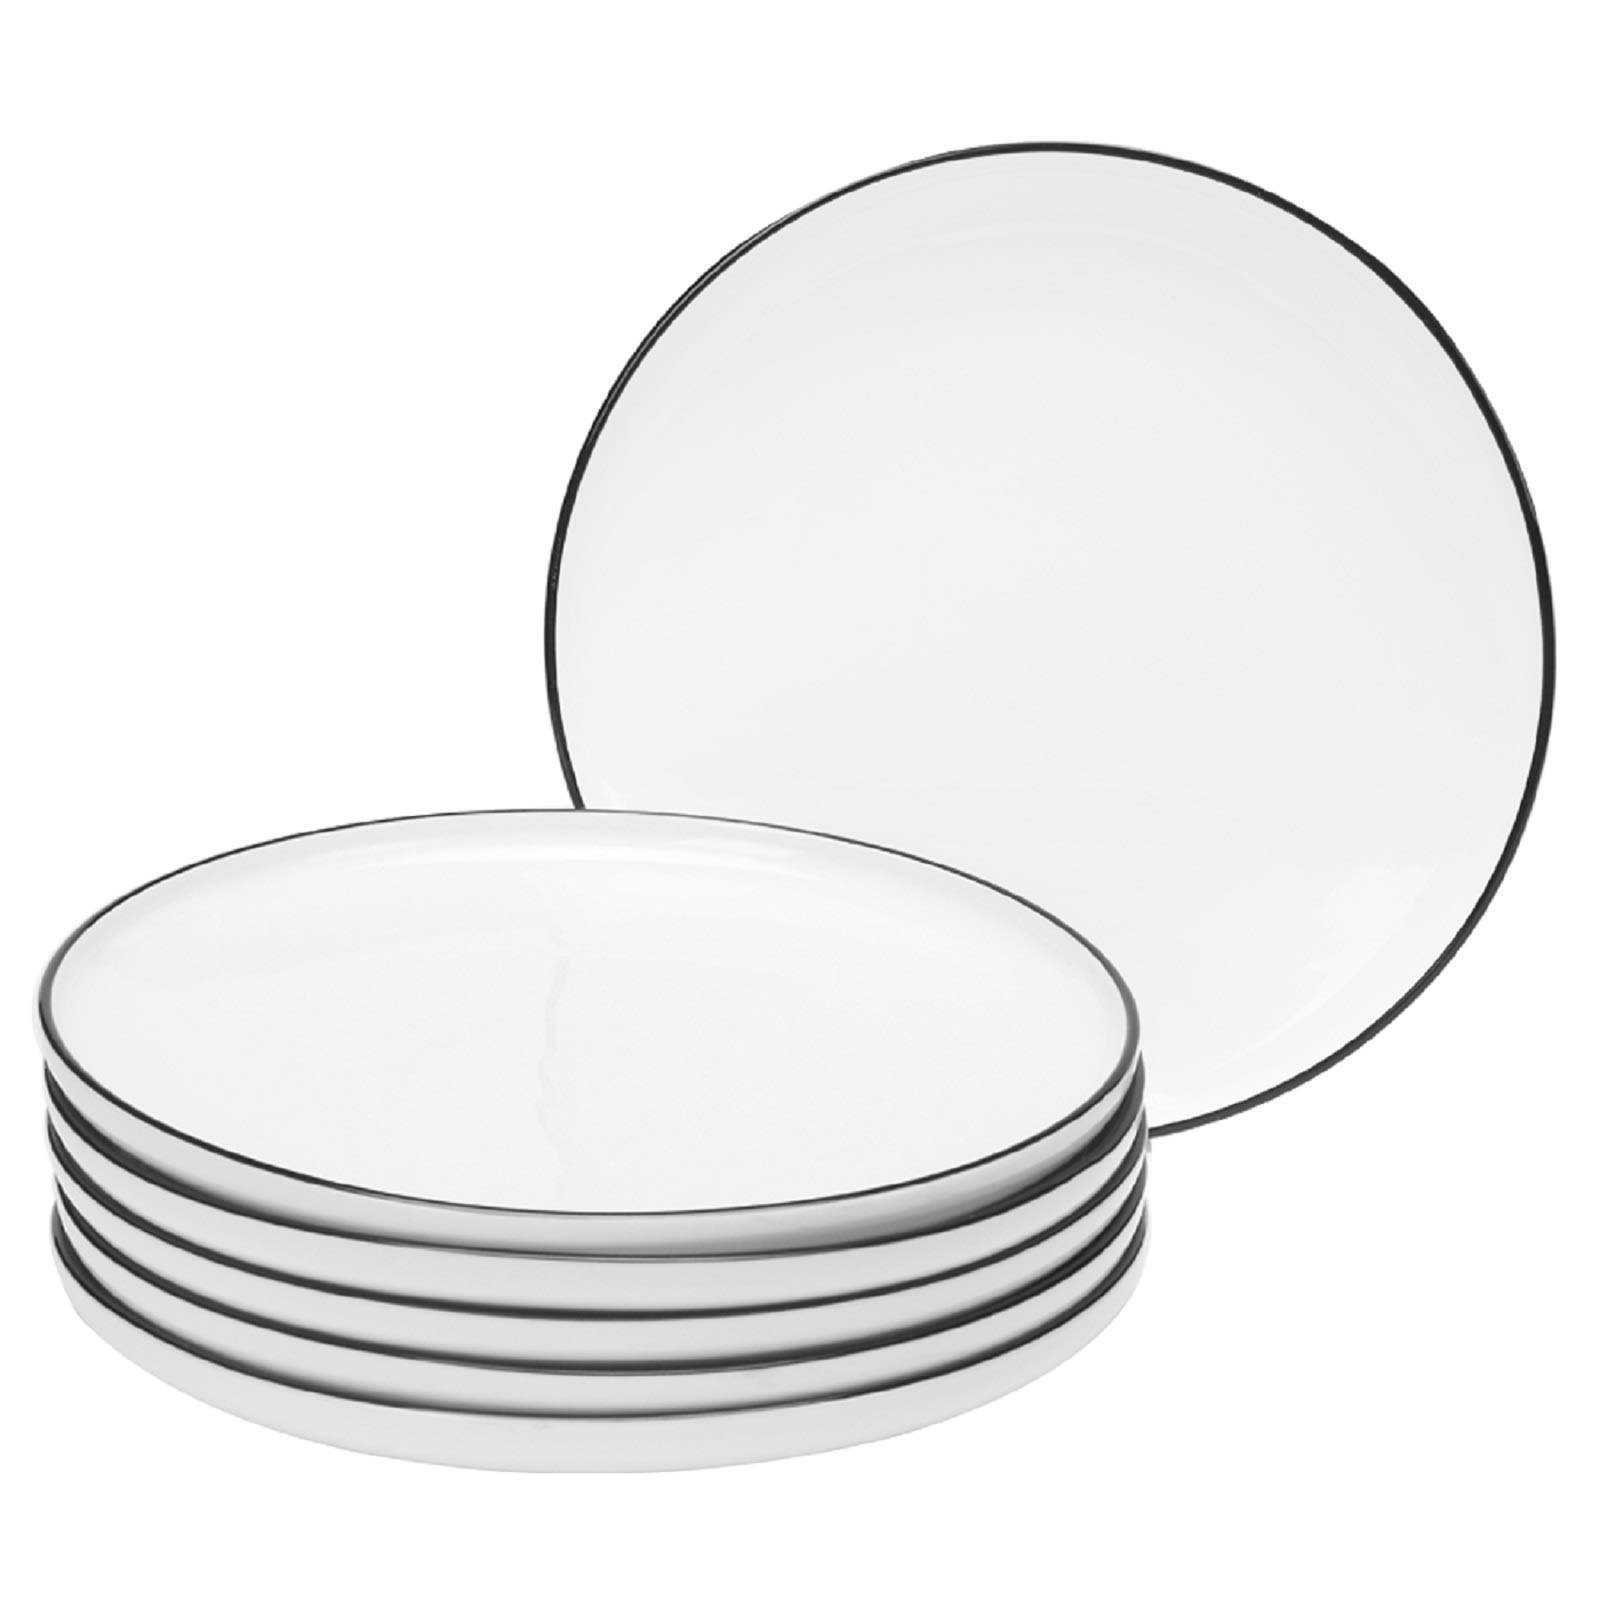 BonNoces 10 Inch Porcelain Dinner Plates, Elegant White with Black Edges Design, Classic Round Serving Plates Set for Steak, Pasta, and Salad, Set ...